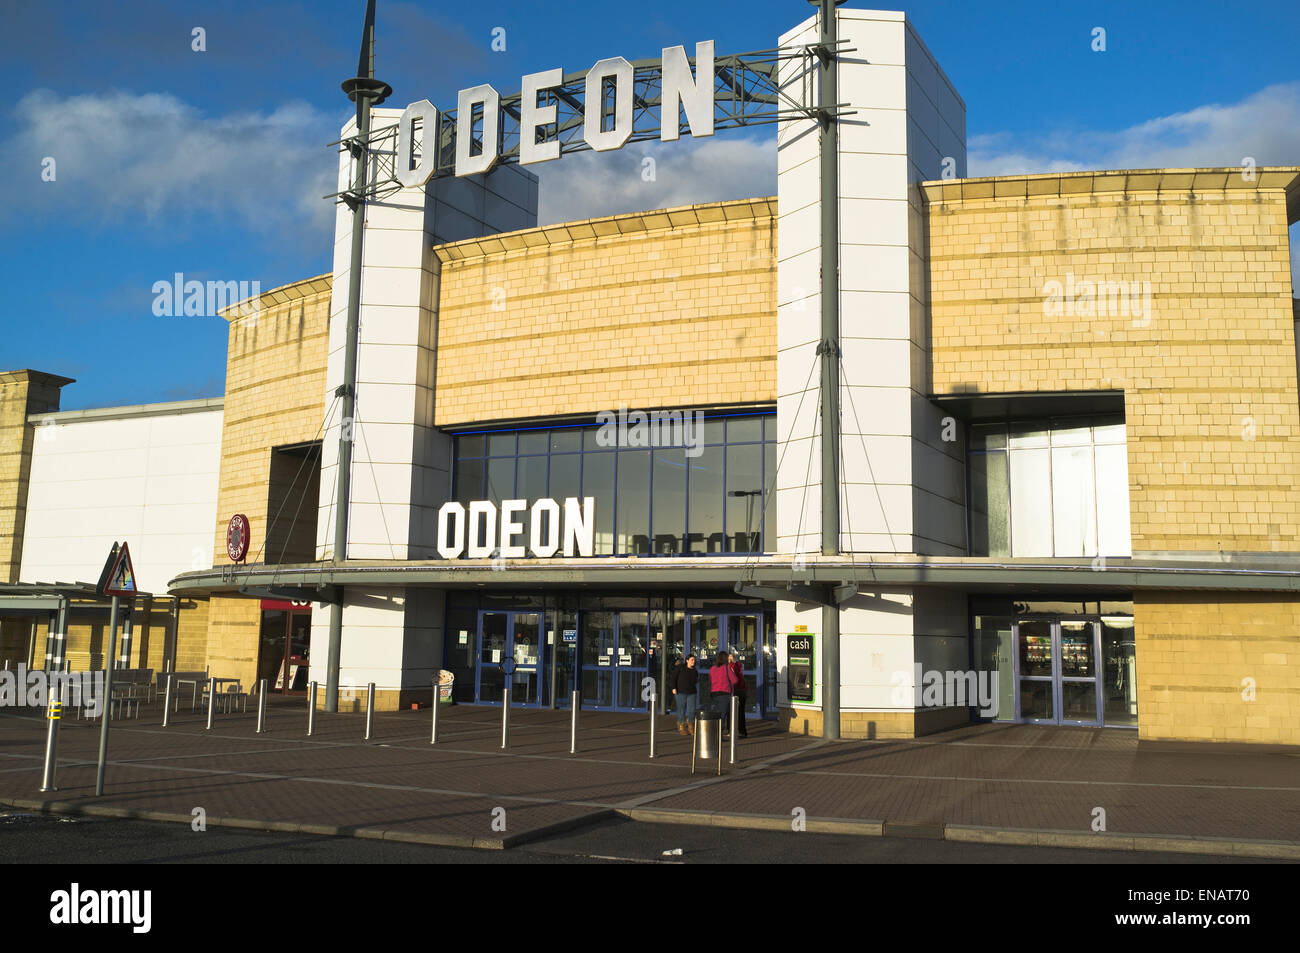 dh Odeon cinema CINEMA UK Cinema entrance sign cinema exterior uk people modern building Stock Photo